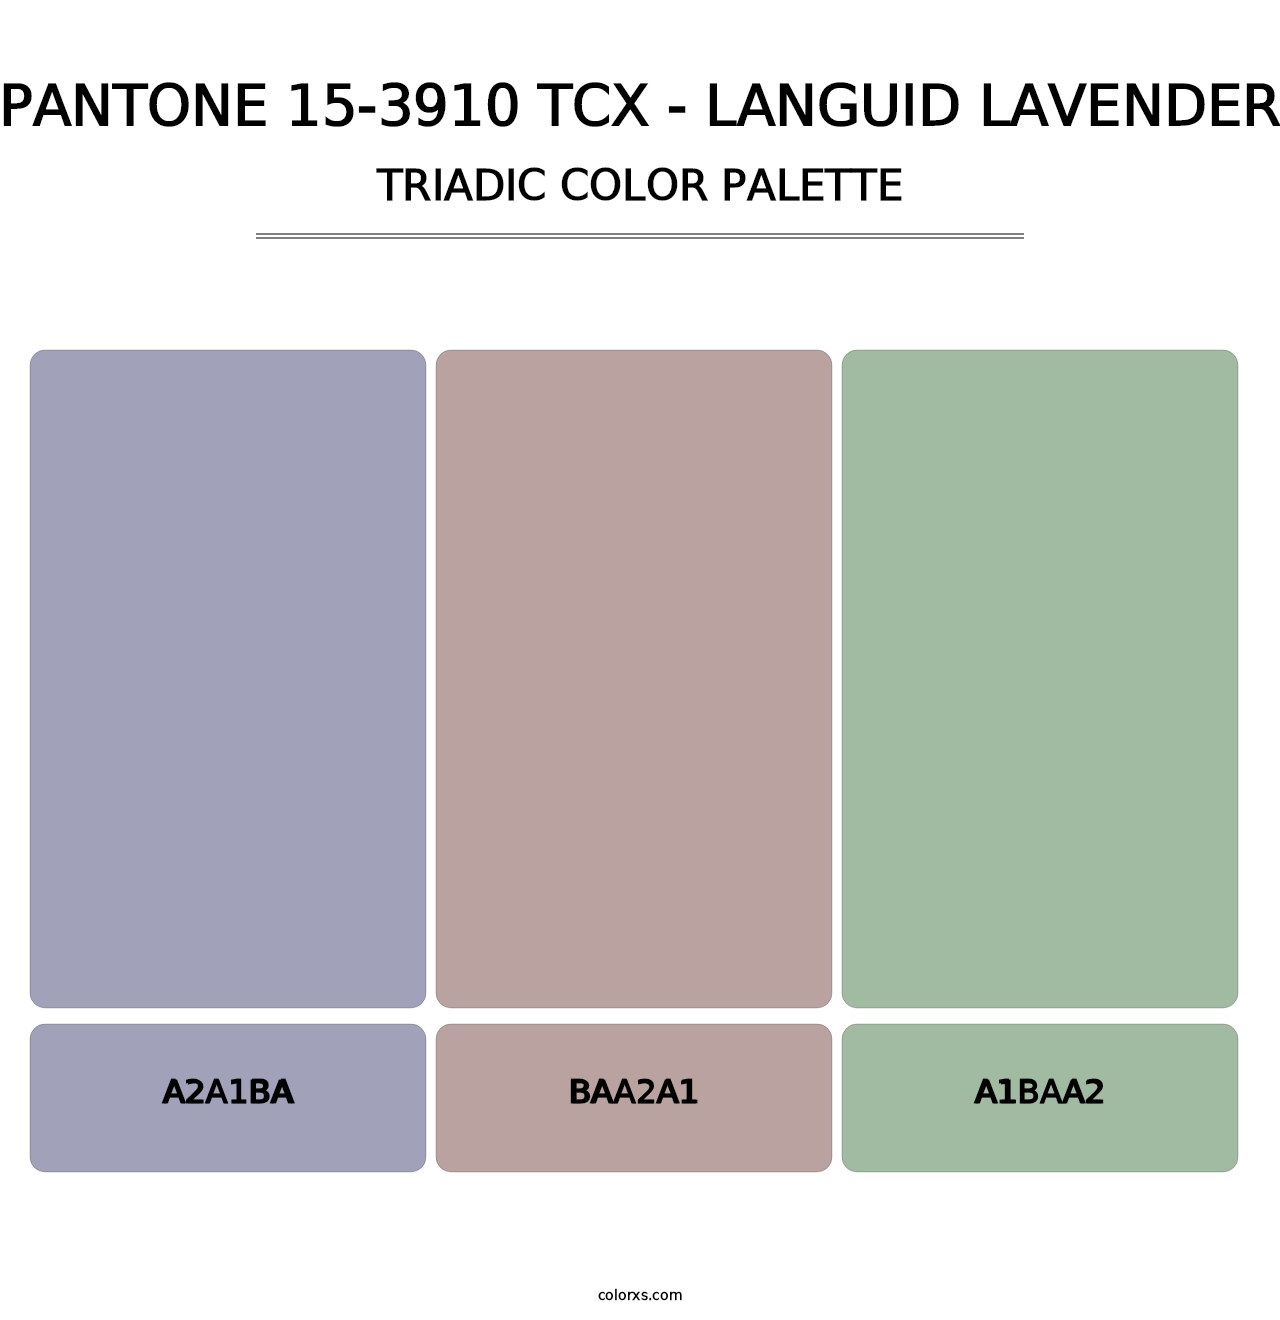 PANTONE 15-3910 TCX - Languid Lavender - Triadic Color Palette